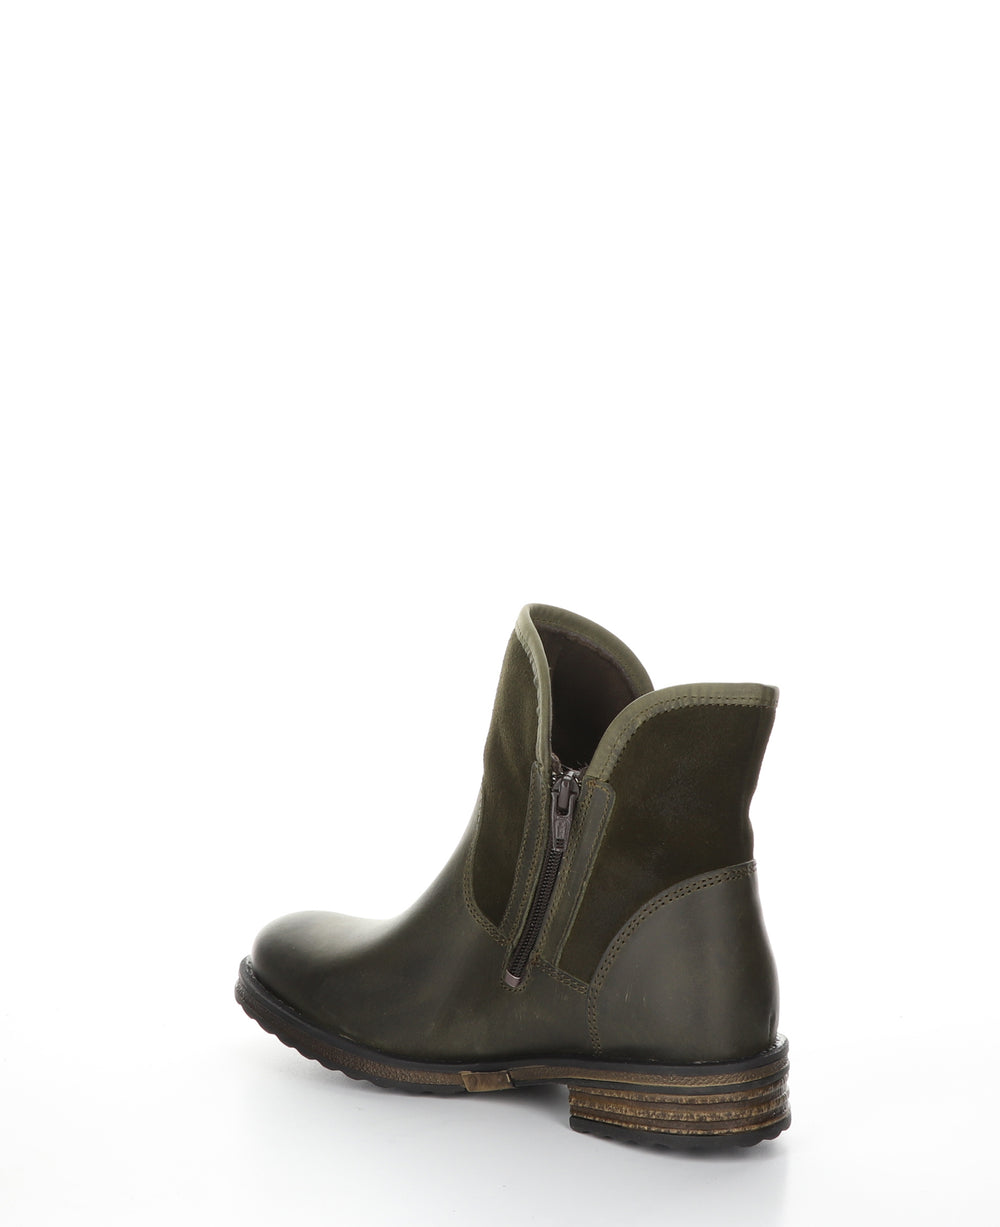 STRIVE Olive Zip Up Ankle Boots|STRIVE Bottines avec Fermeture Zippée in Vert